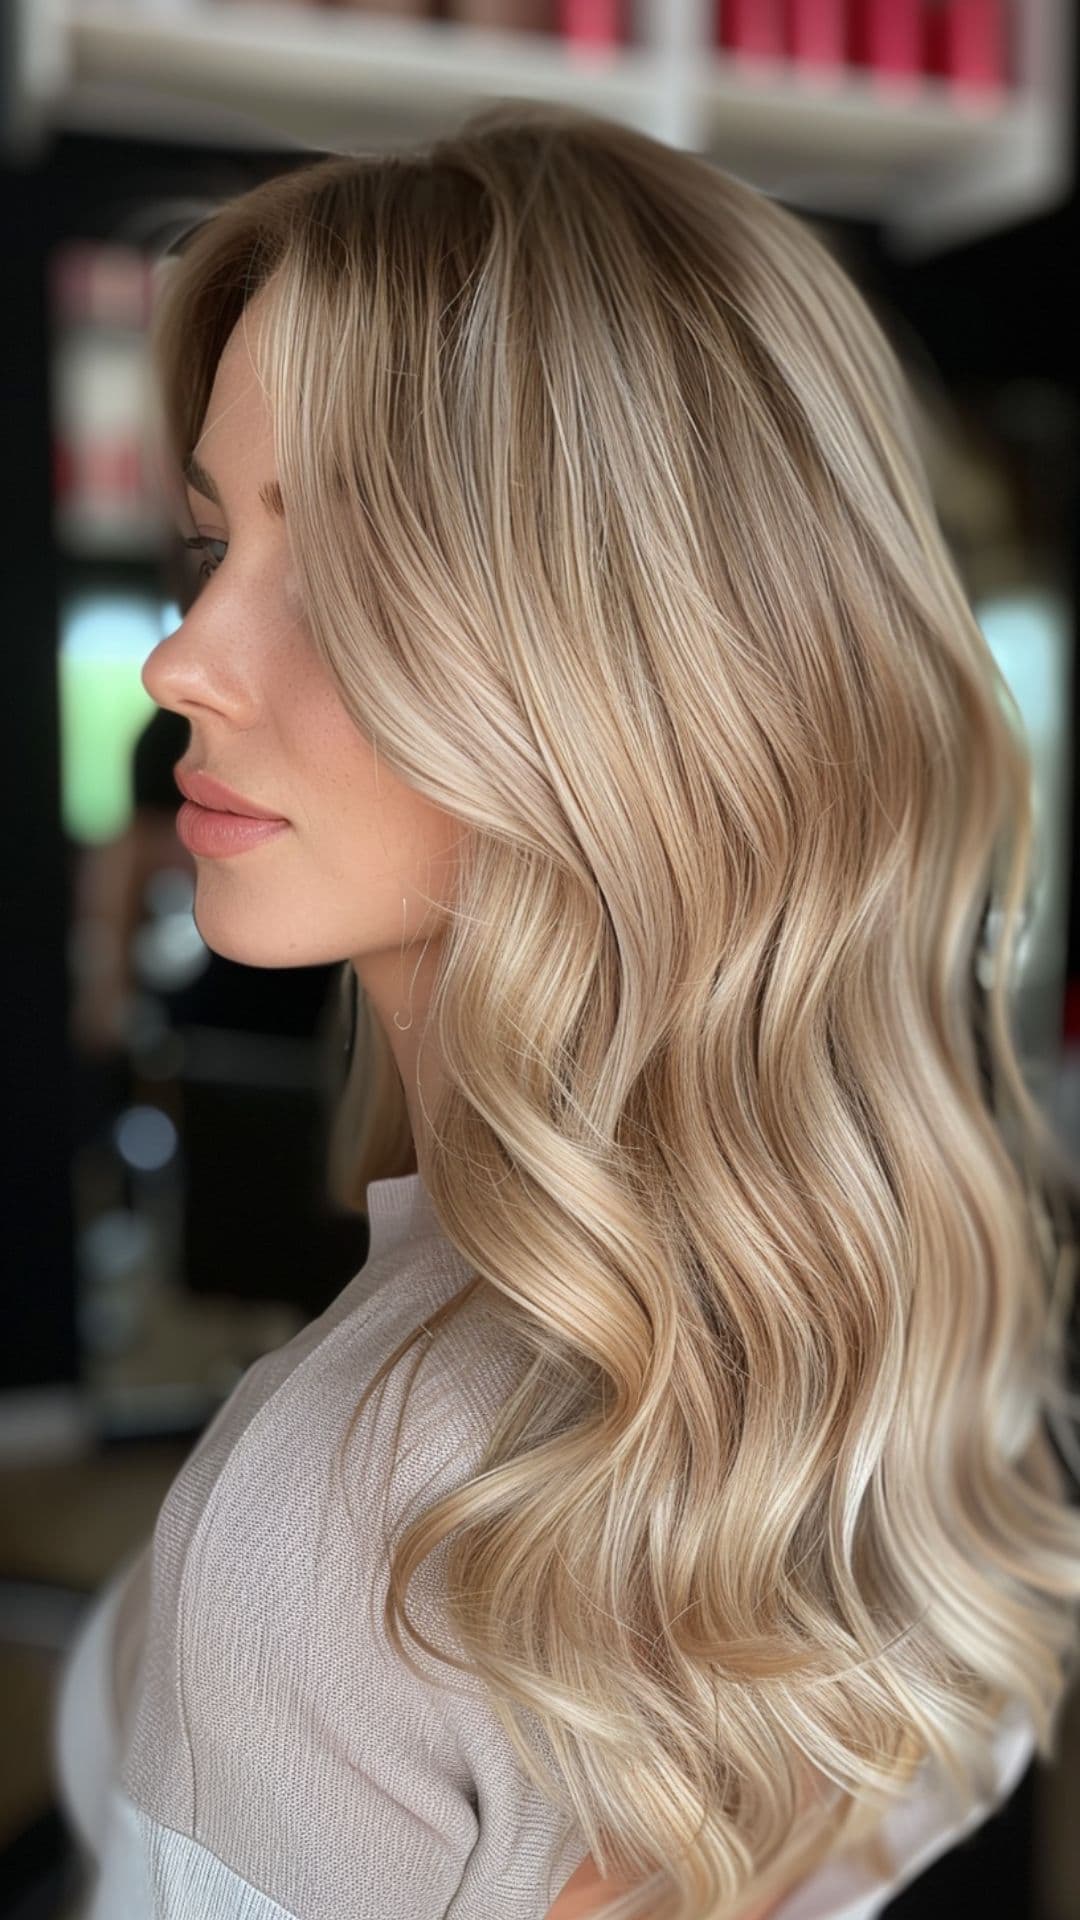 A woman modelling a beige blonde hair.